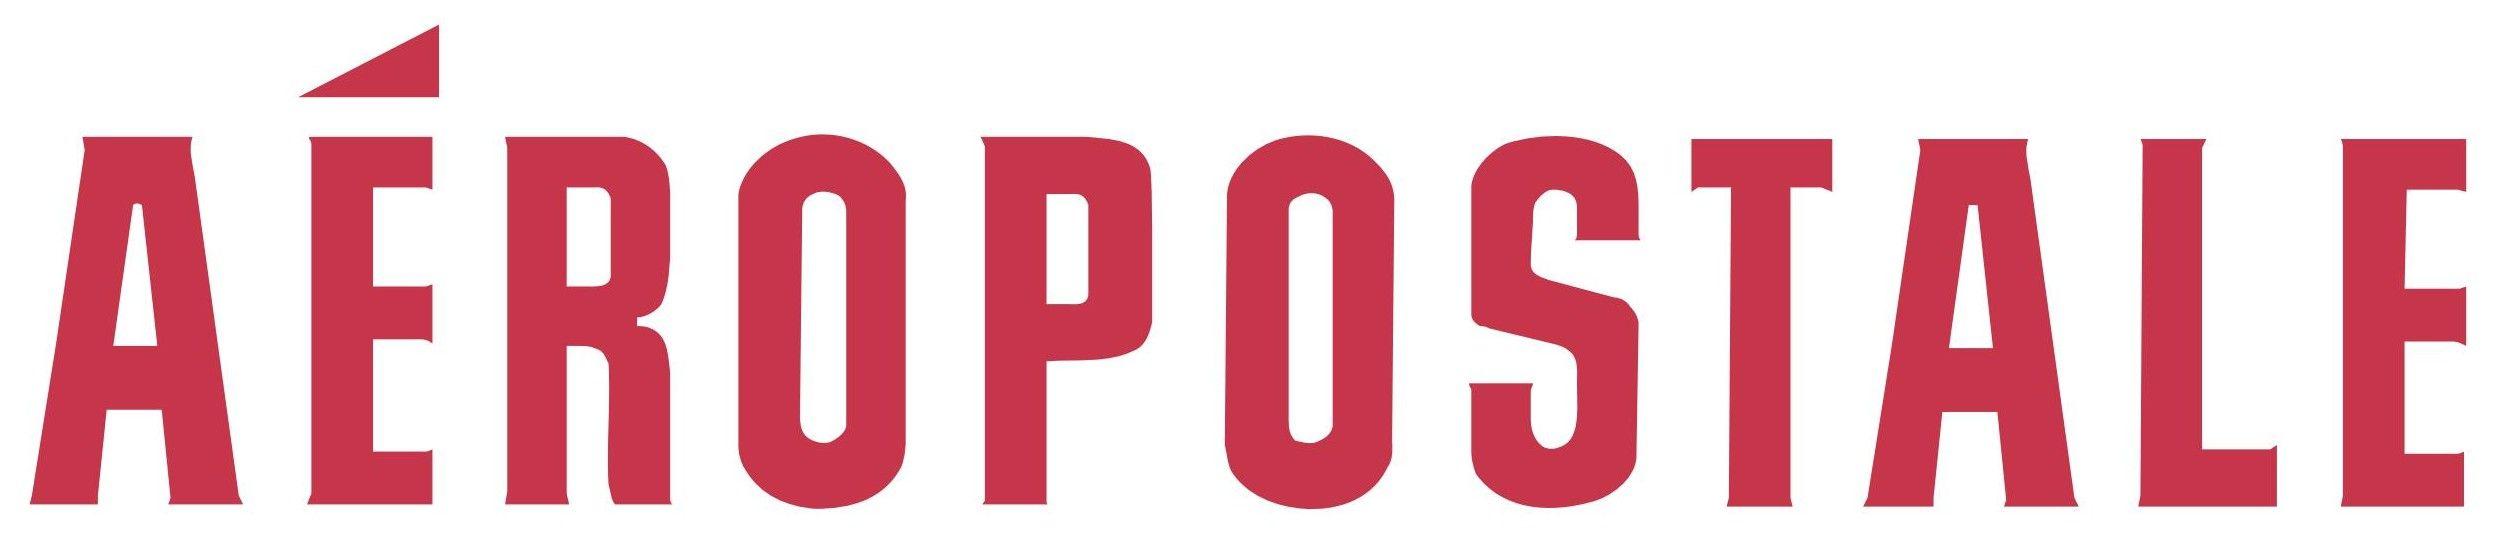 Areopostle Logo - Aéropostale Logo [EPS File]. Clothing Company Logos, 2019